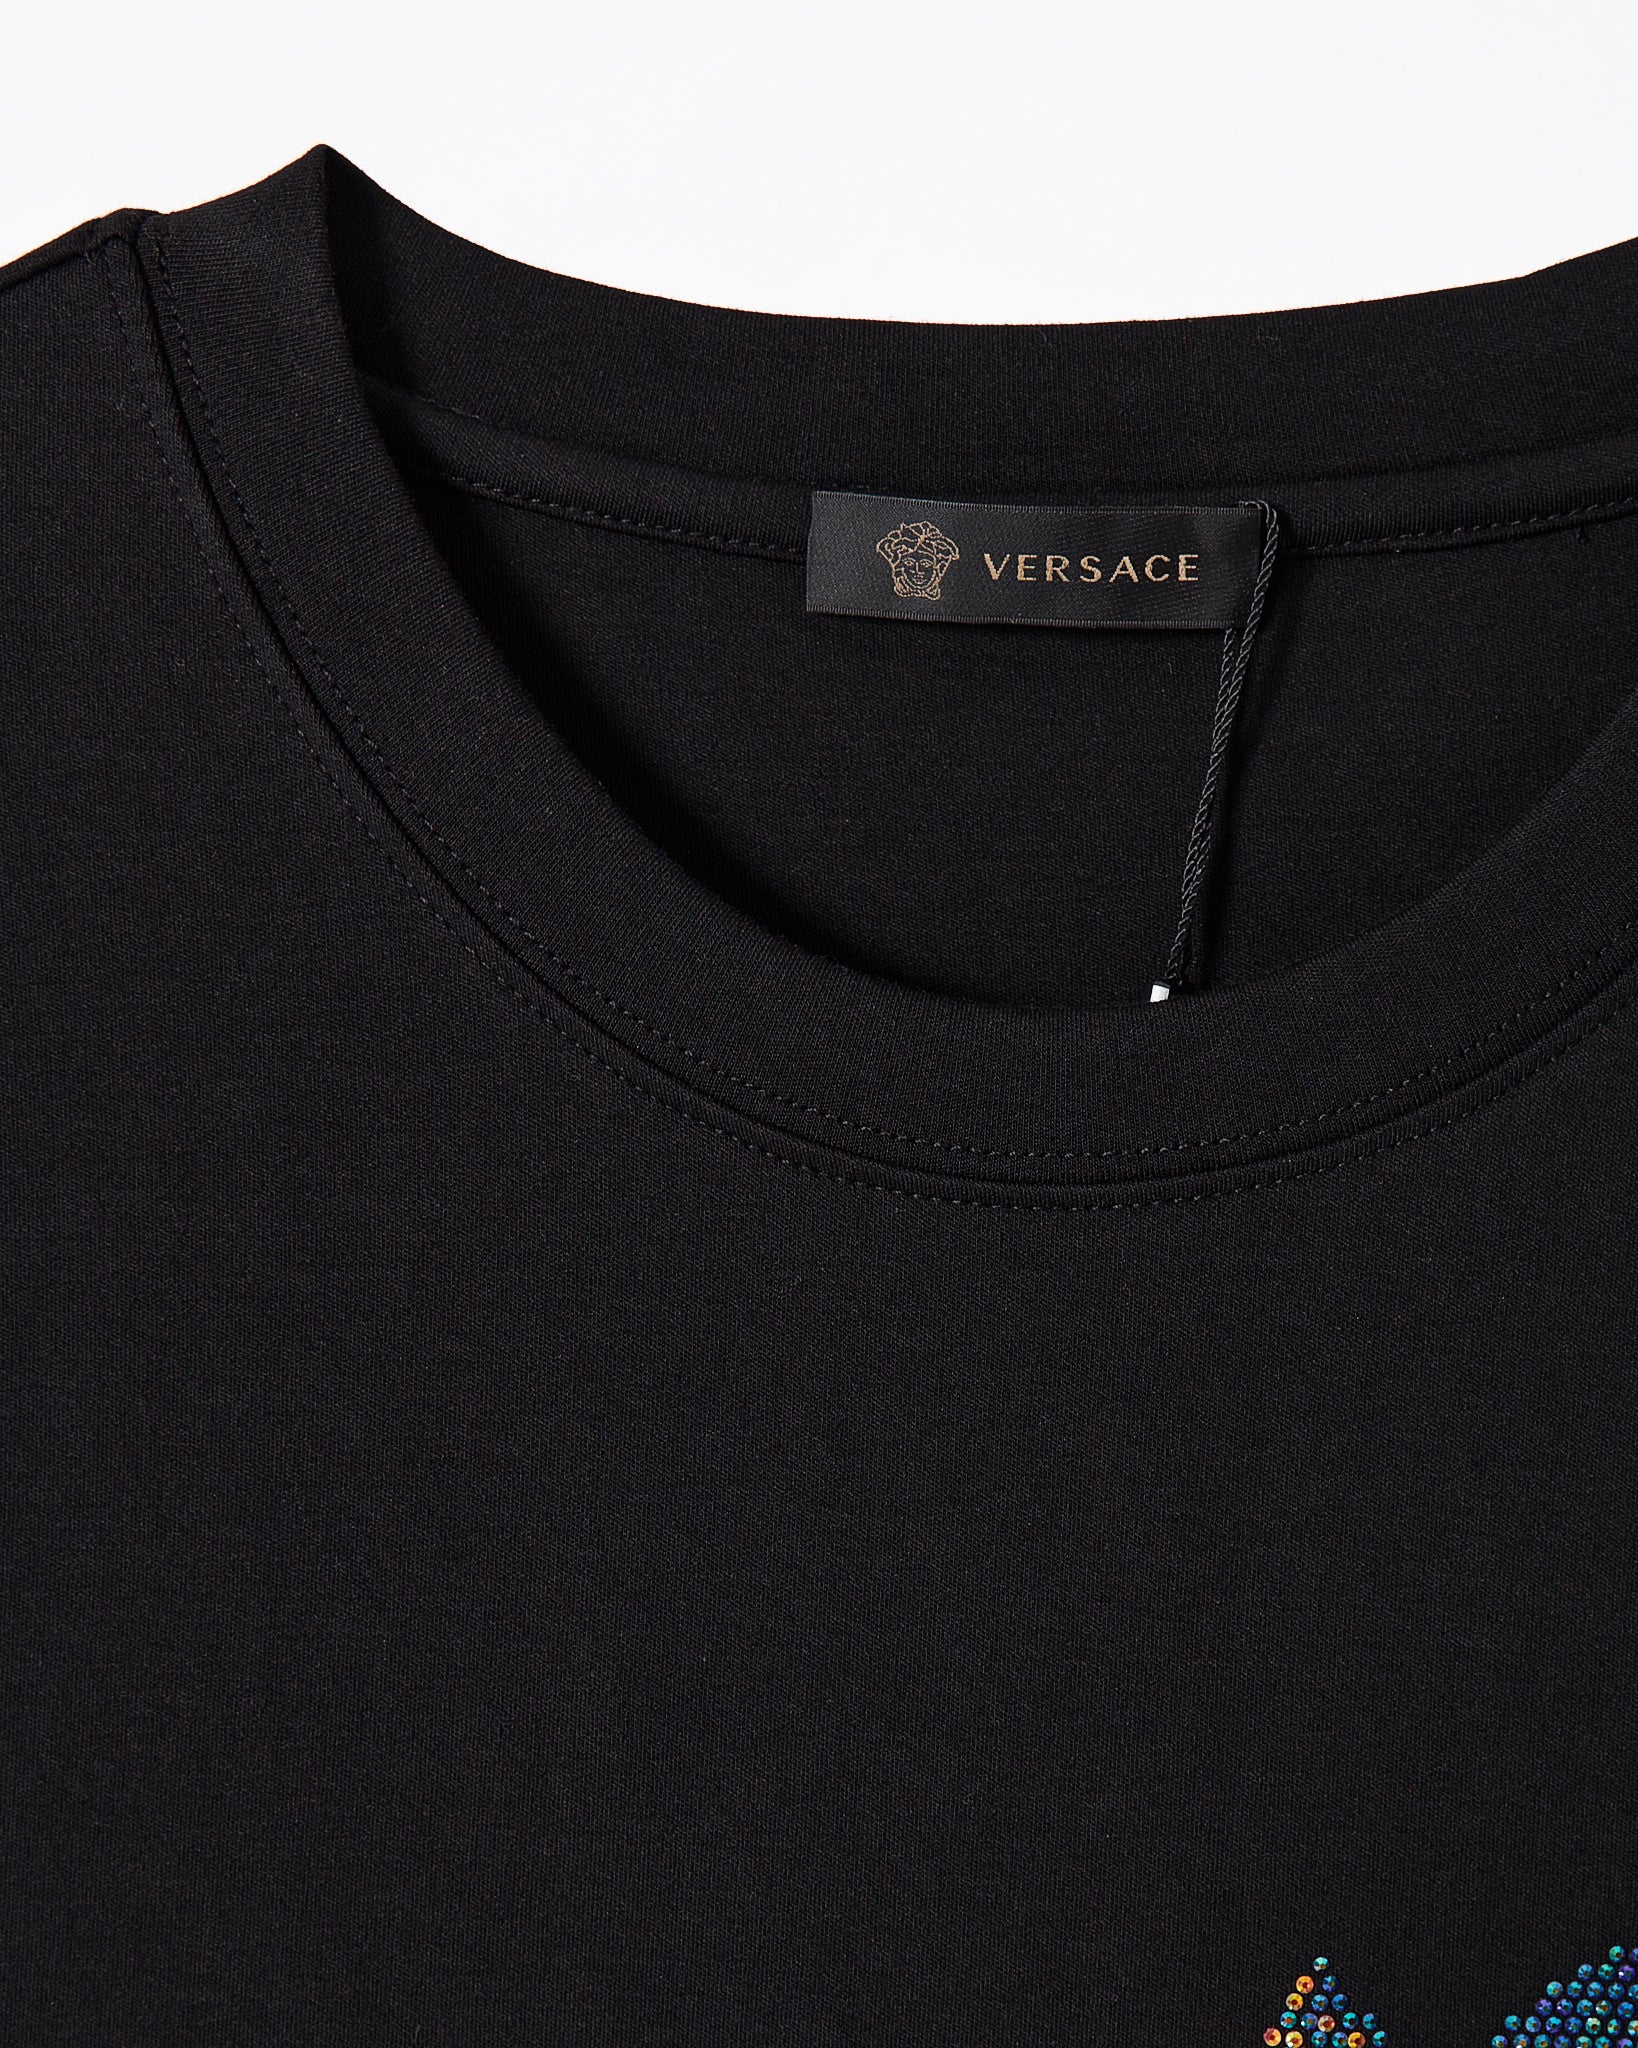 VER Rhinestone Medusa Printed Men Black T-Shirt 68.90